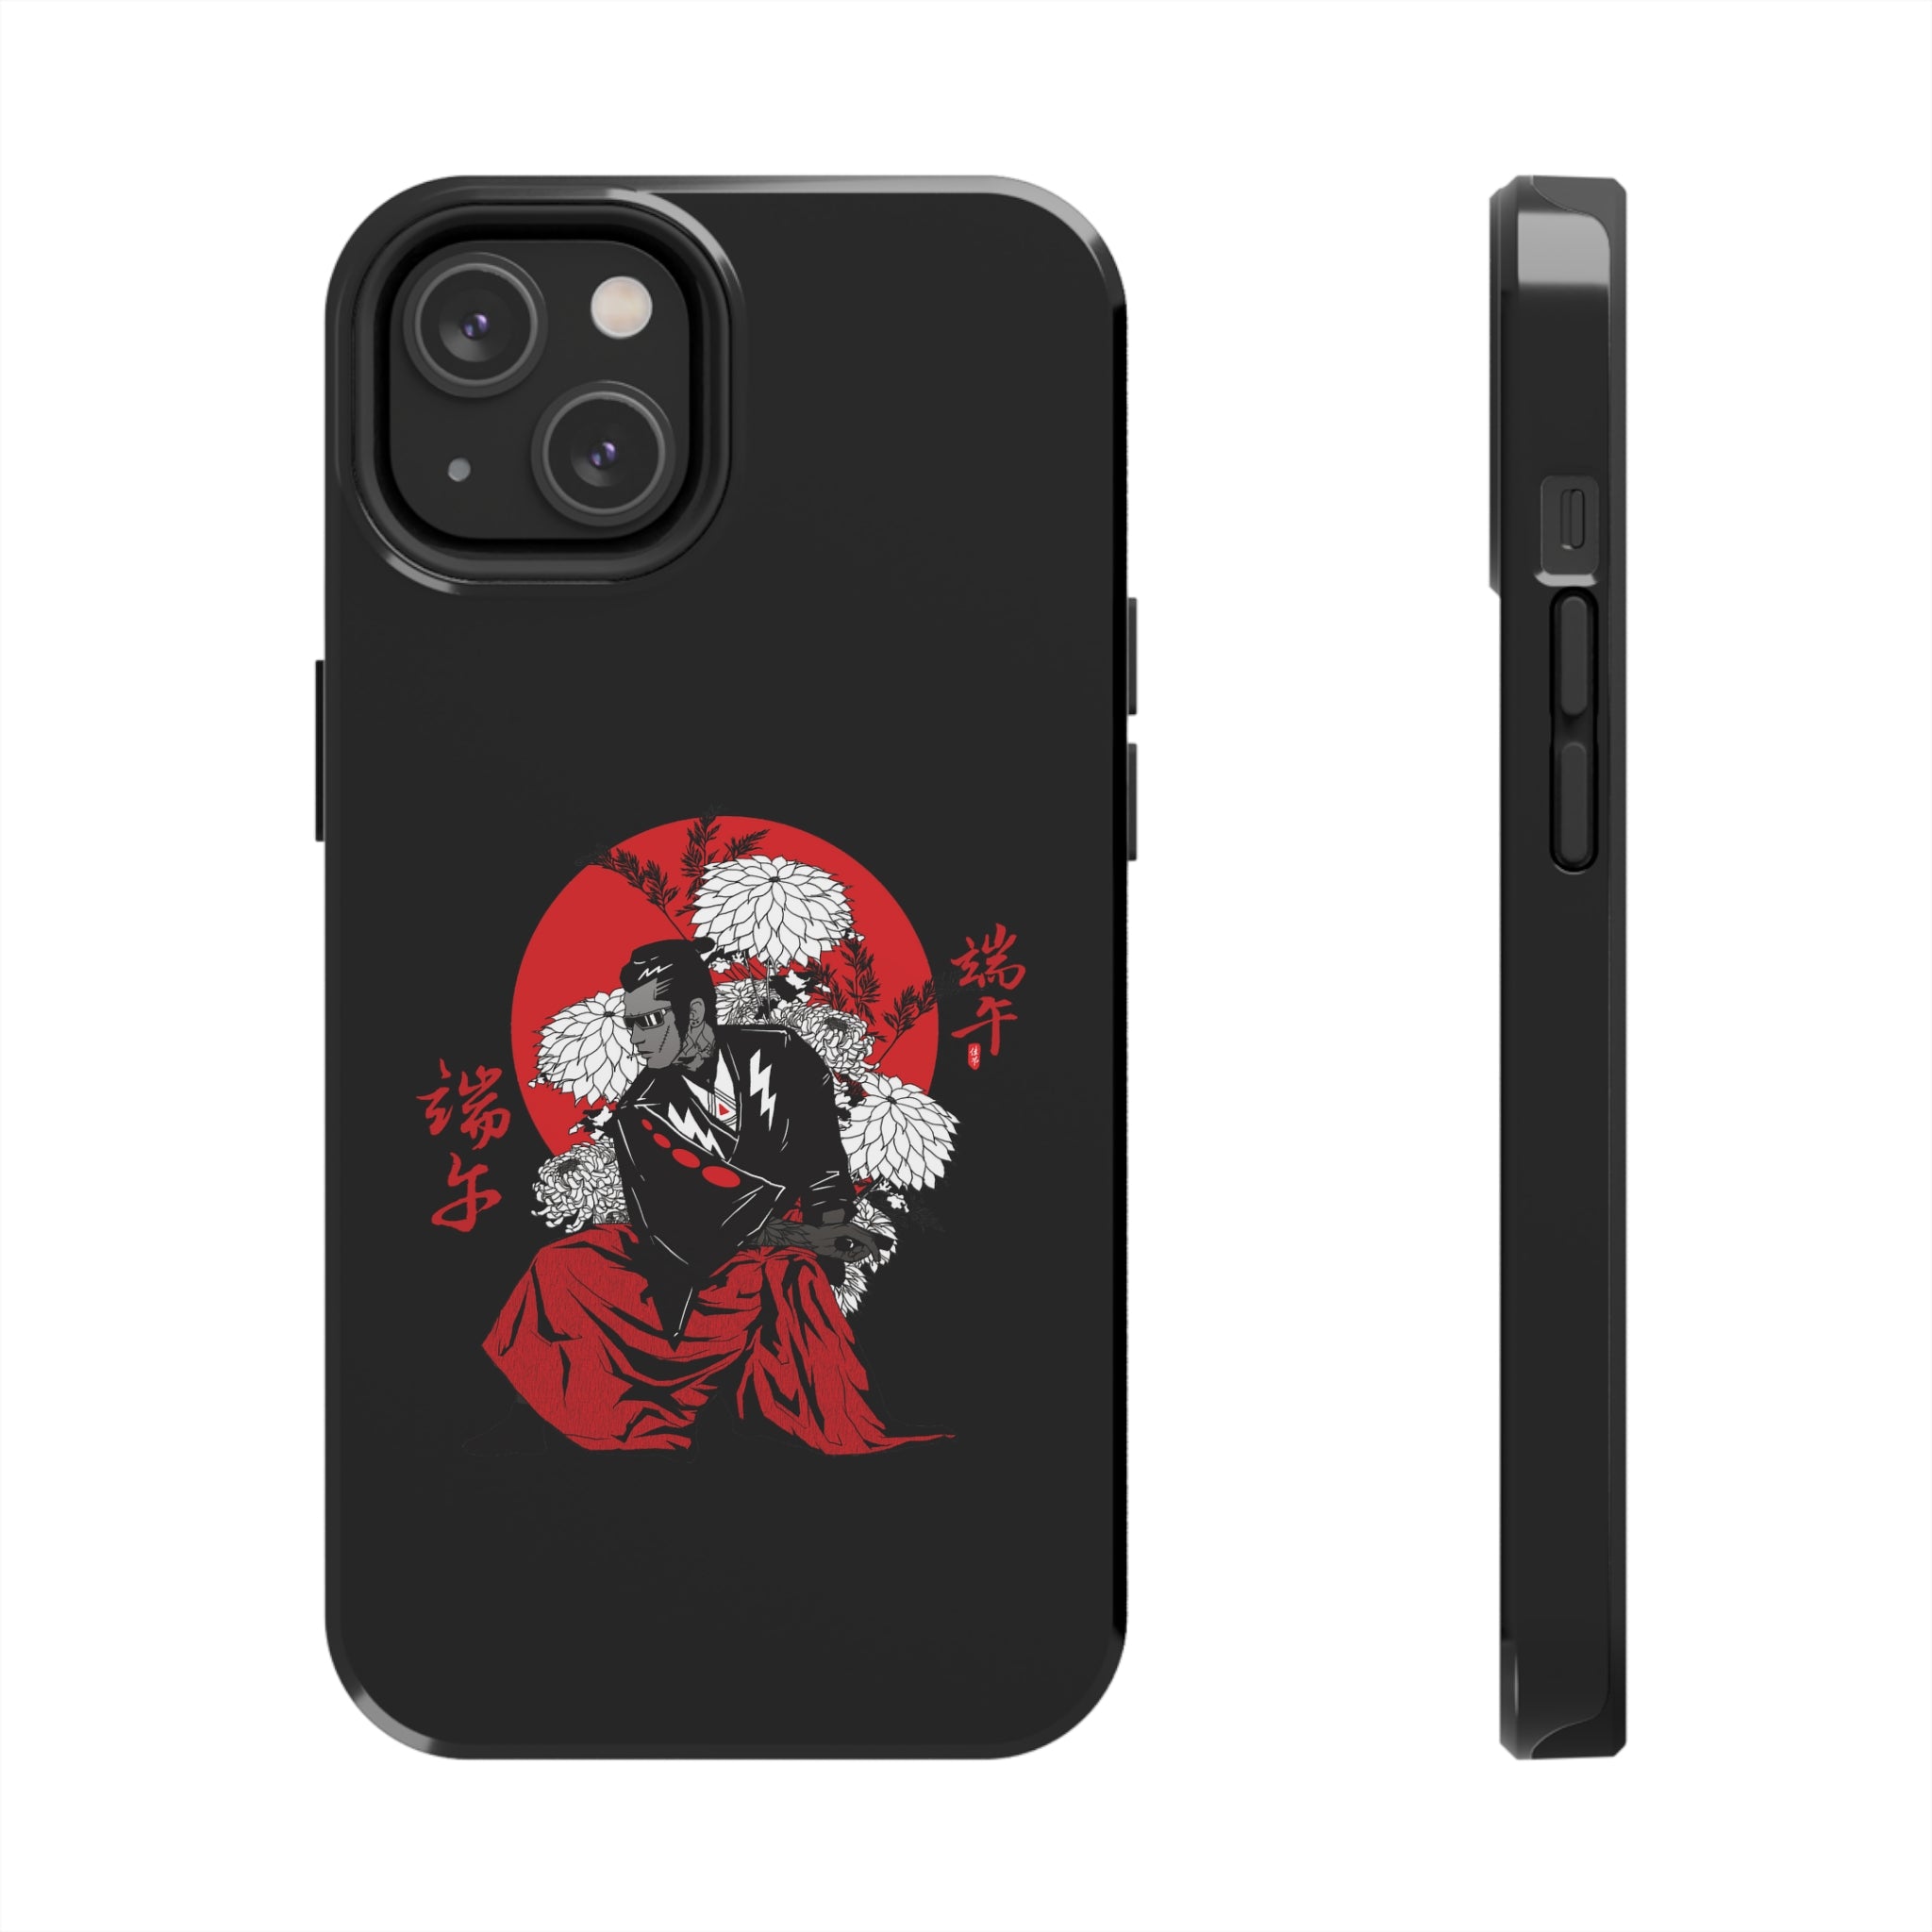 Tough Phone Case with Samurai Design